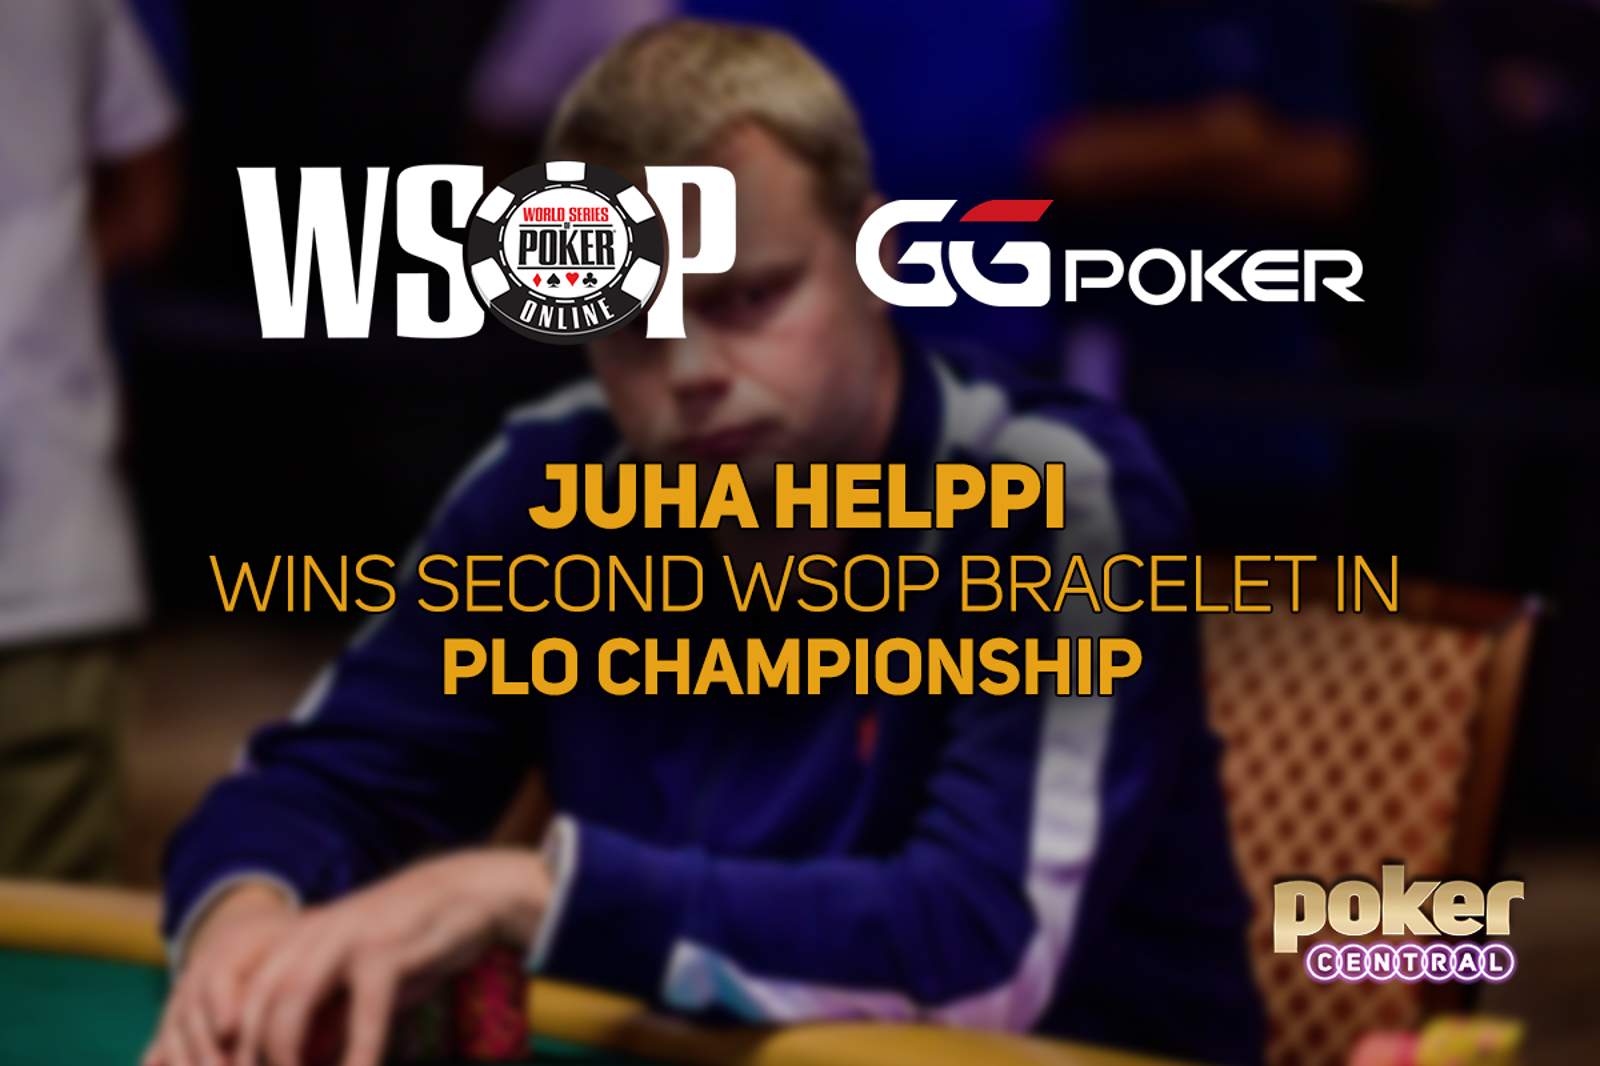 Juha Helppi Wins GGPoker WSOP Online $5,000 PLO Championship for $290,286 and Second Bracelet